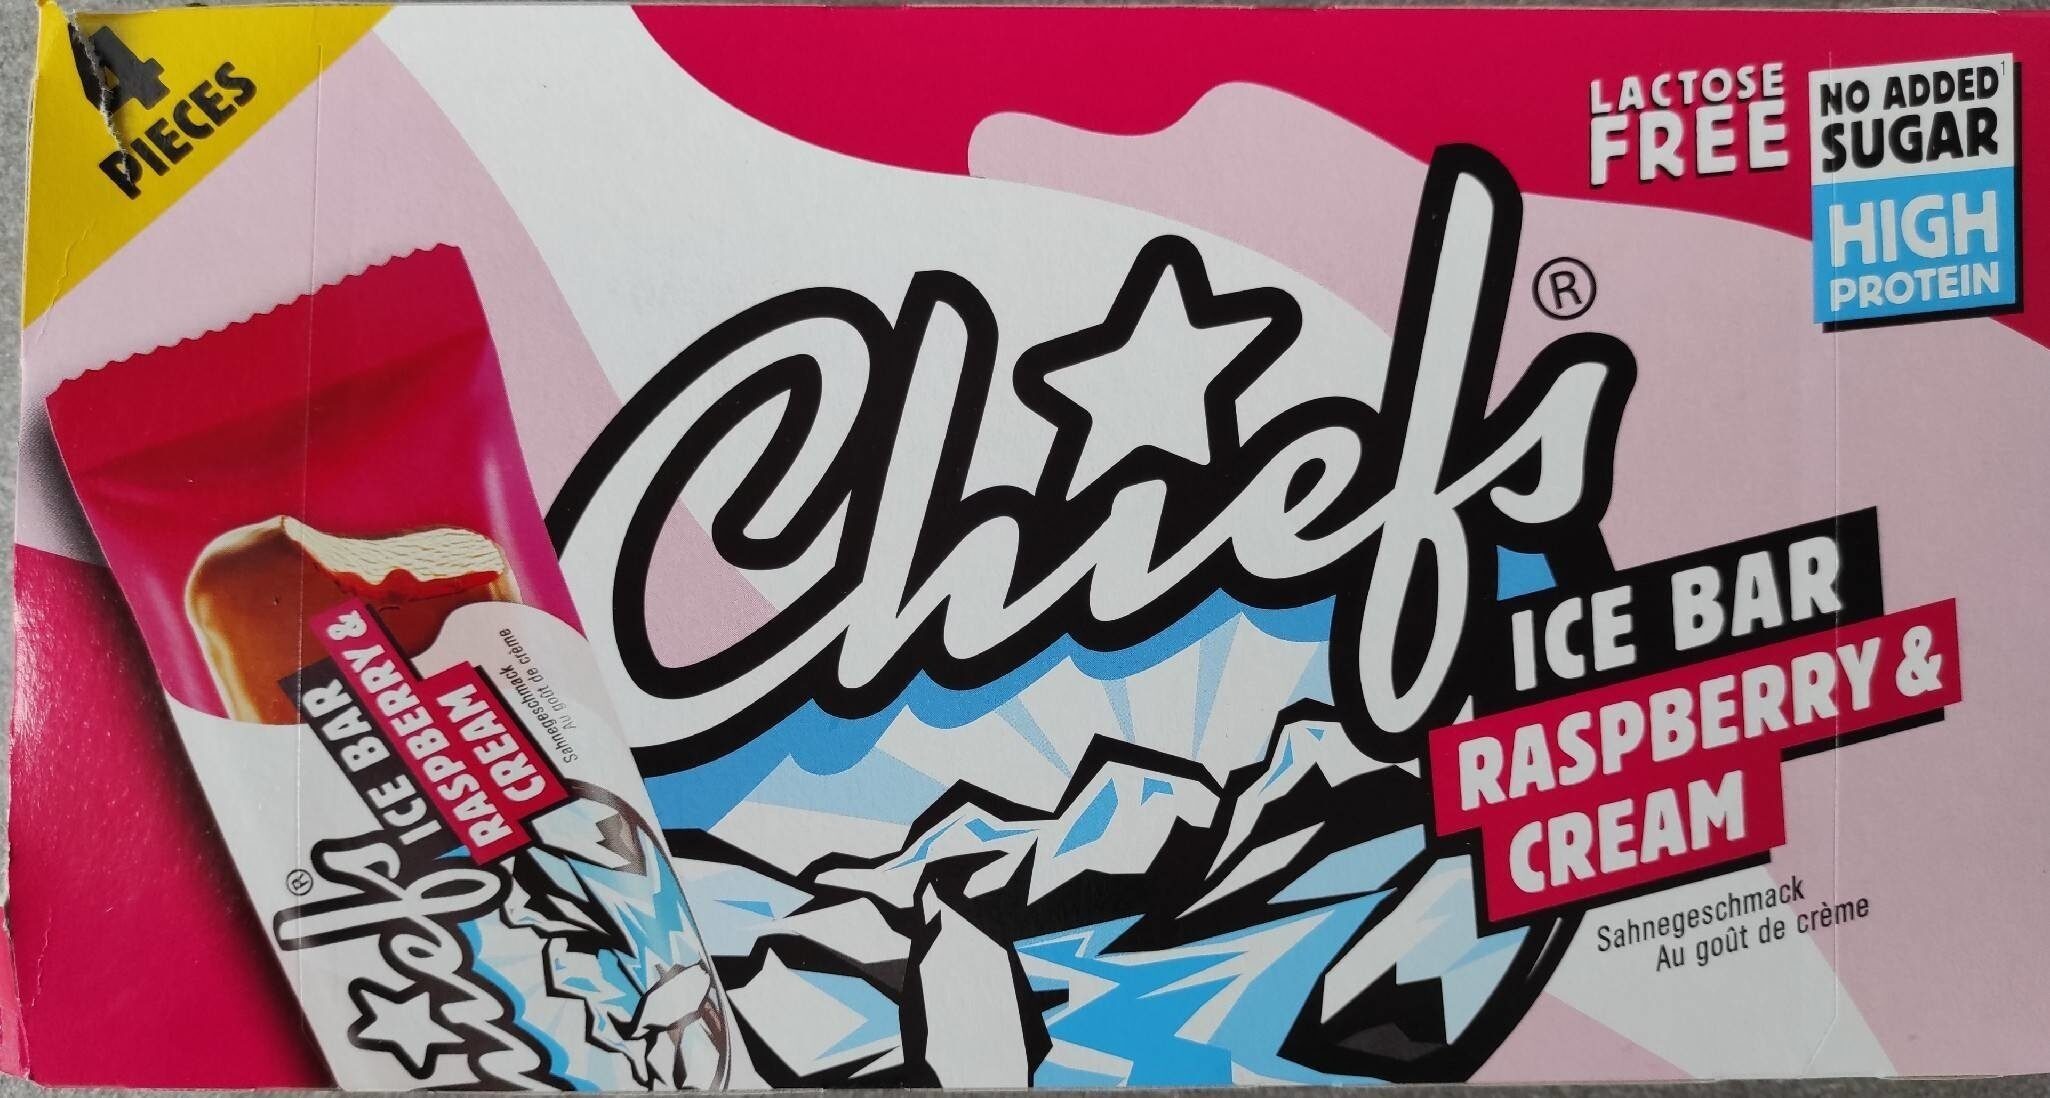 Chiefs Ice Bar Raspberry & cream - Prodotto - en